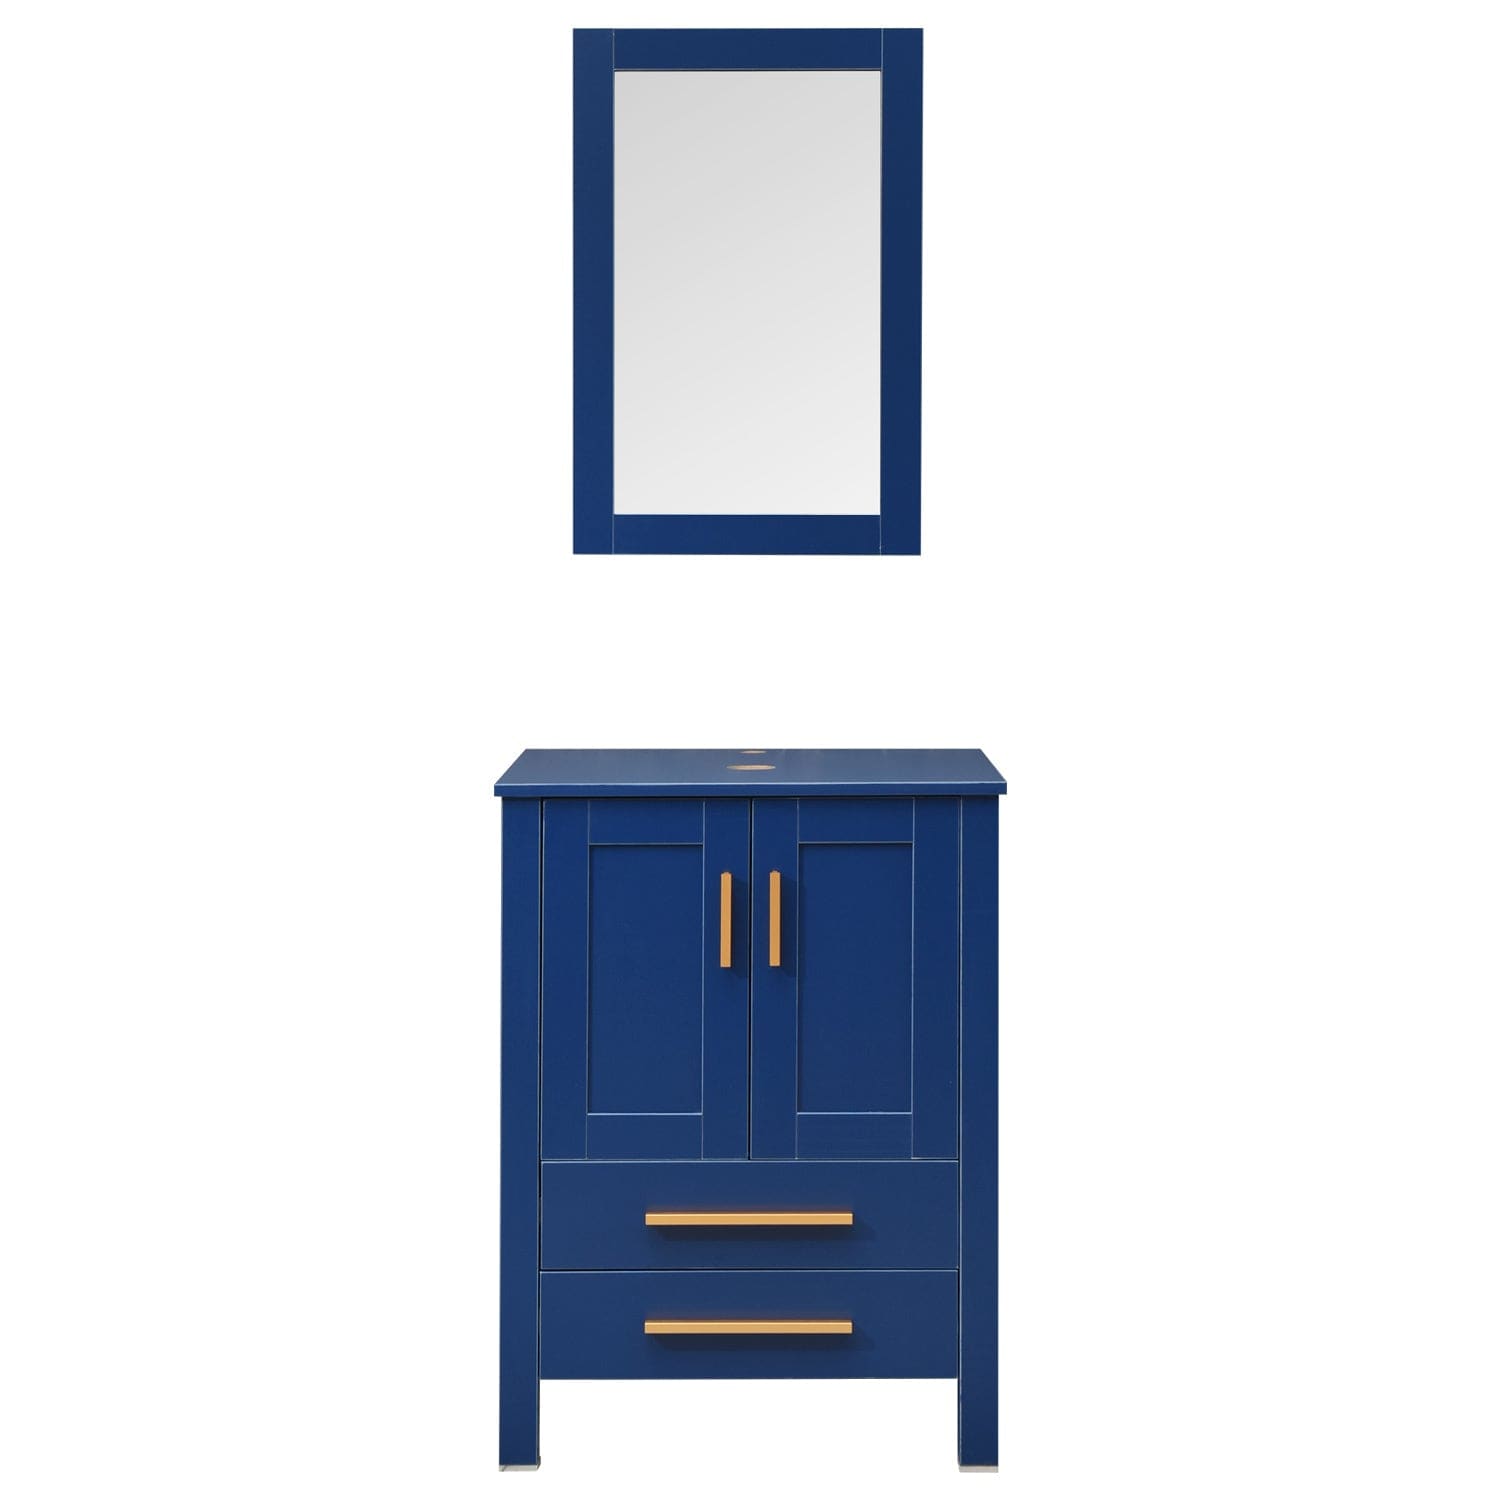 Elecwish 24-Inch Bathroom Vanity, Modern Wood Fixture Stand Pedestal Cabinet with Mirror, Blue